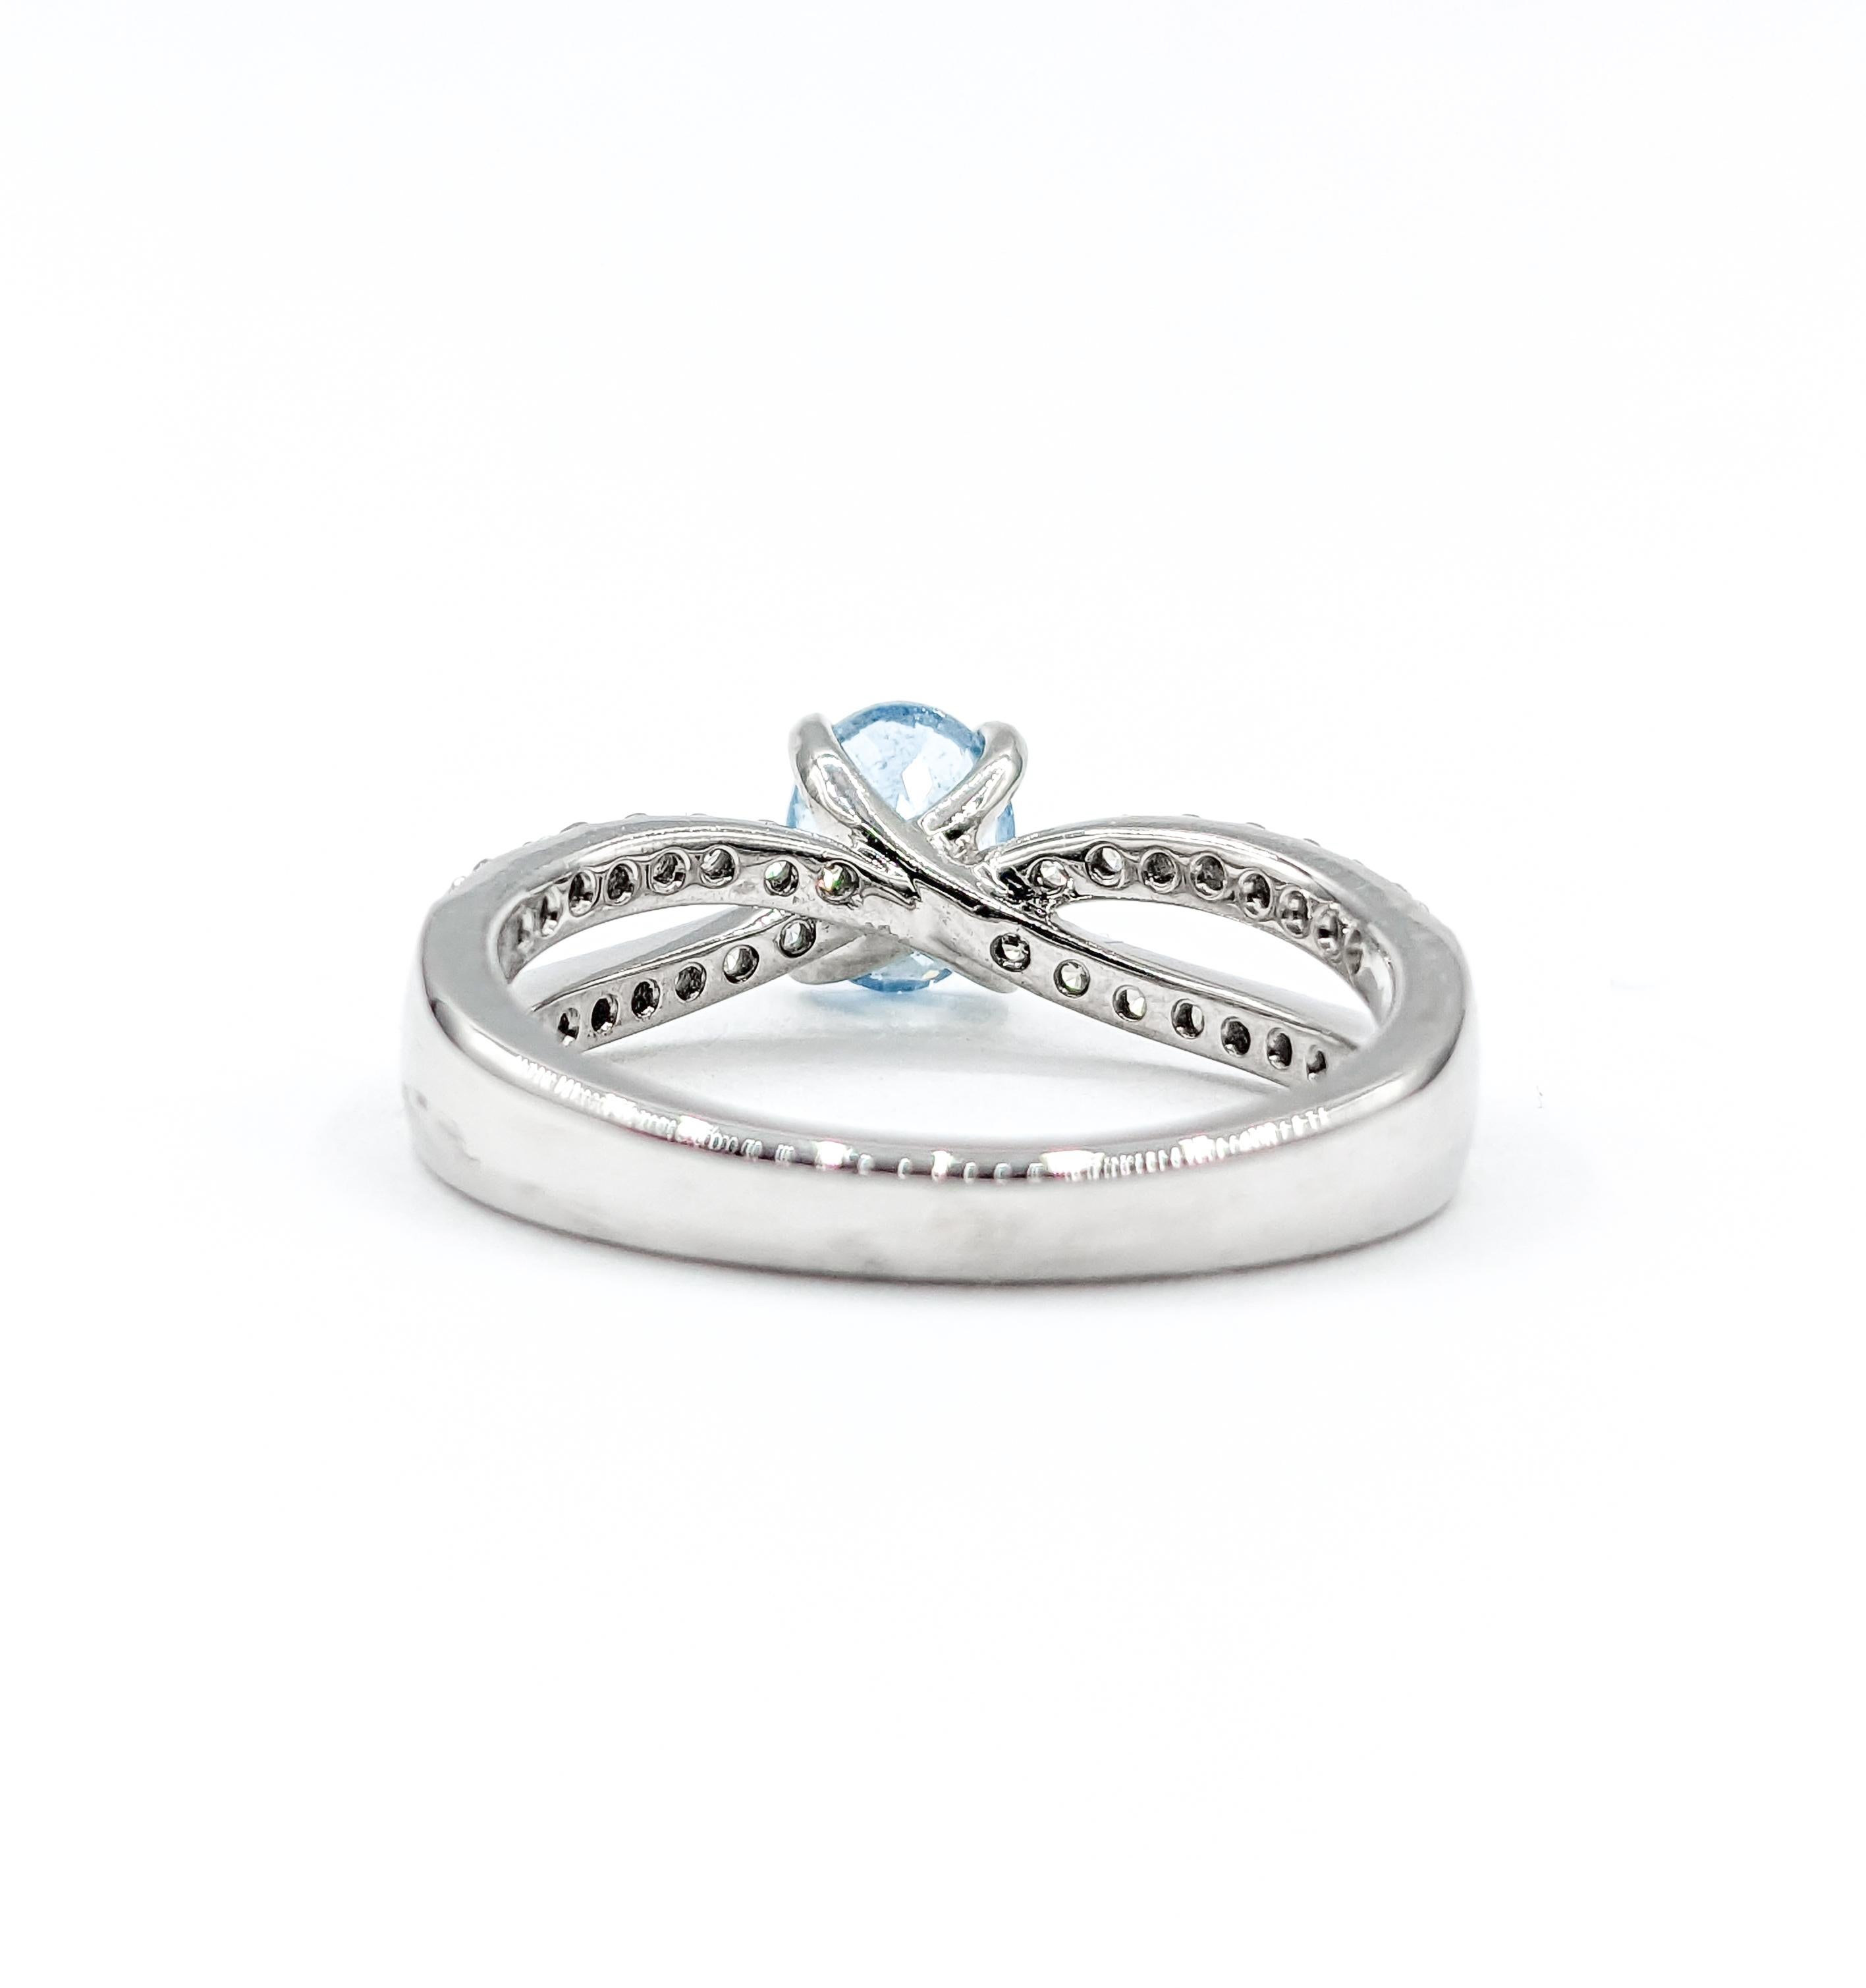 Aquamarine & Diamond Ring in 18k White Gold For Sale 3